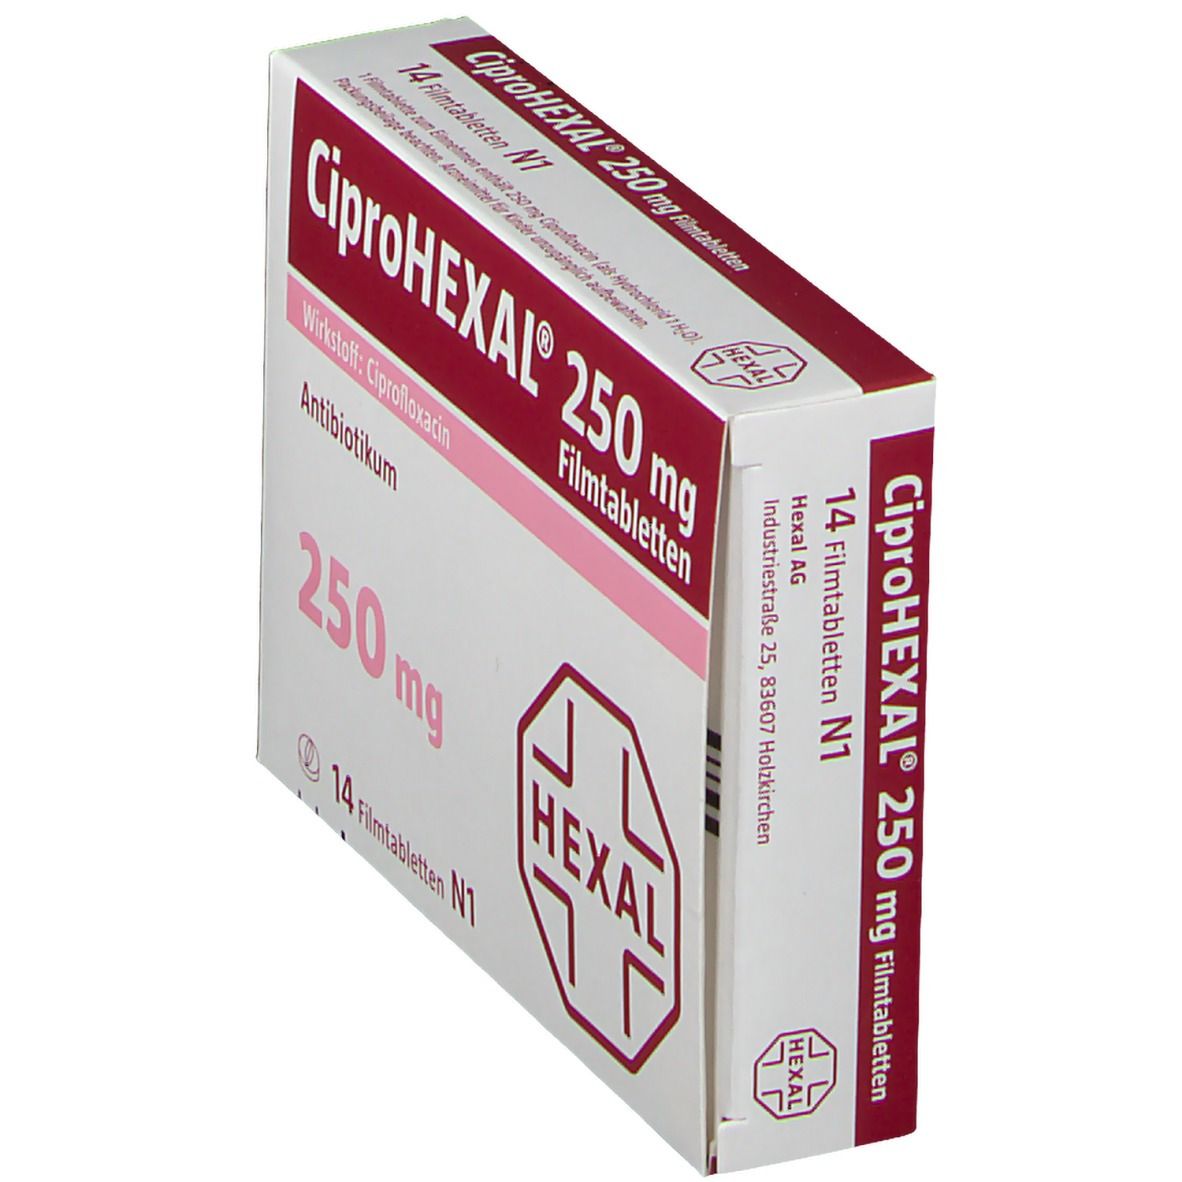 CiproHEXAL® 250 mg